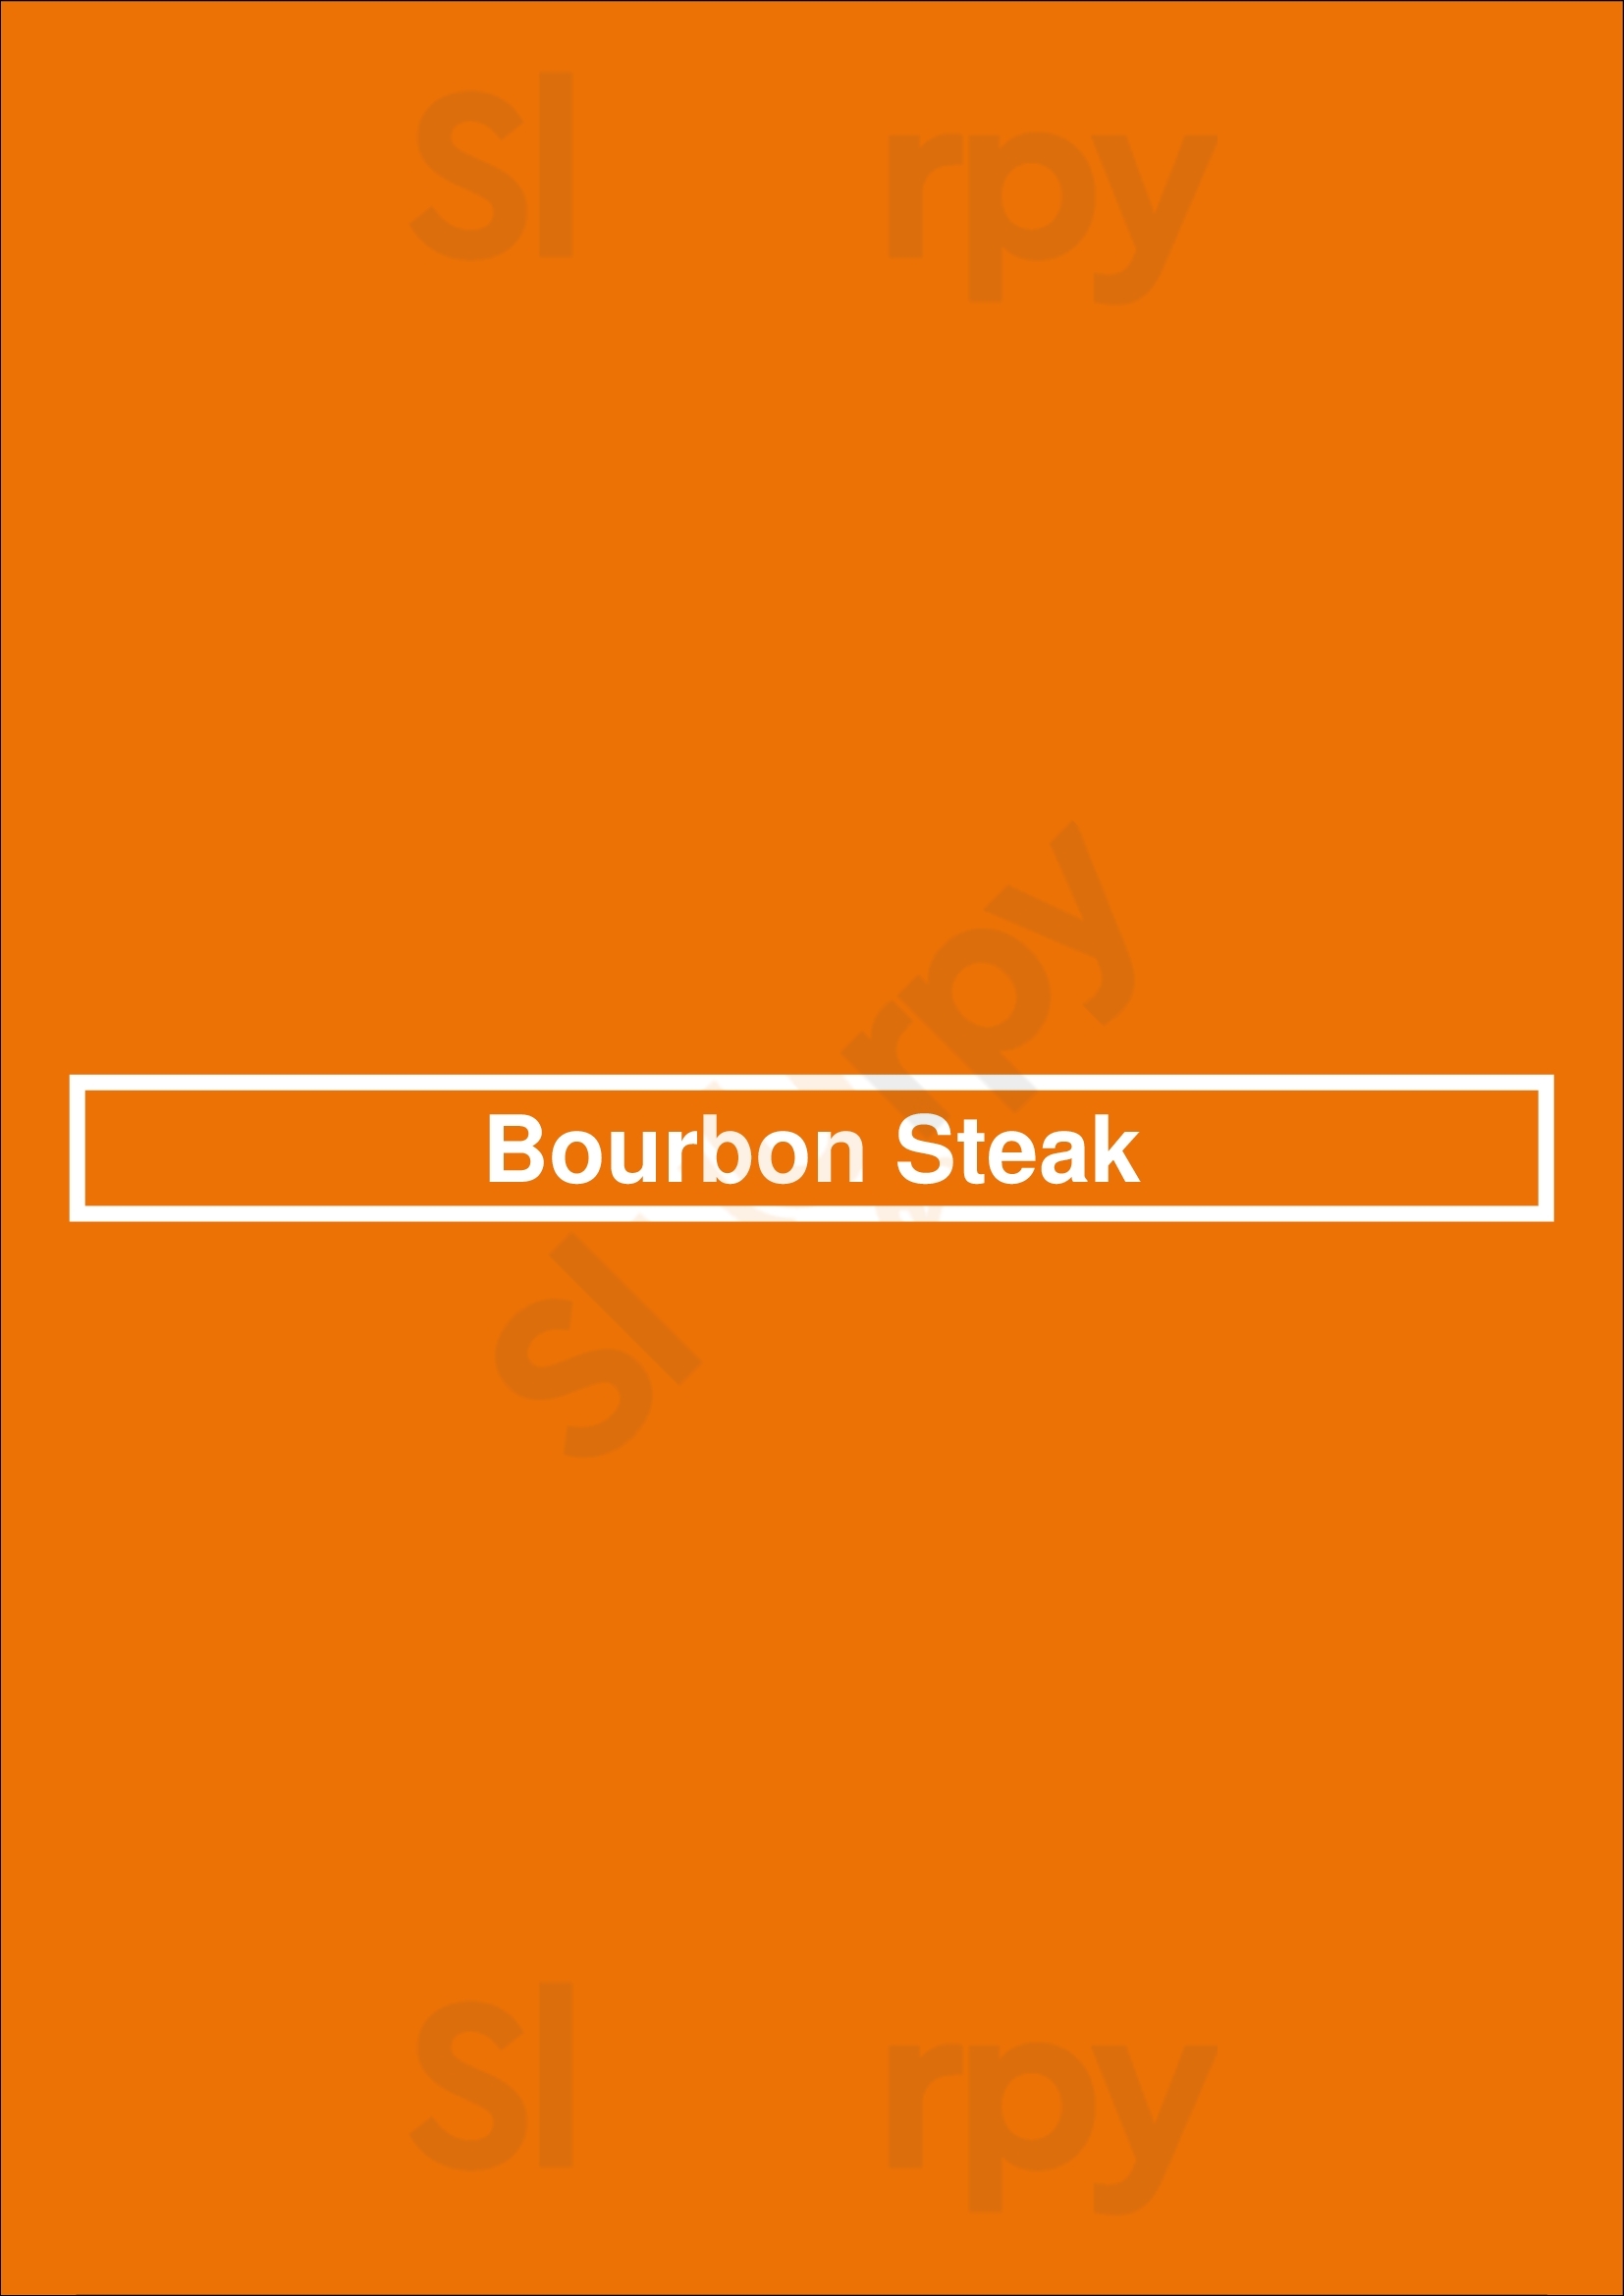 Bourbon Steak Scottsdale Menu - 1